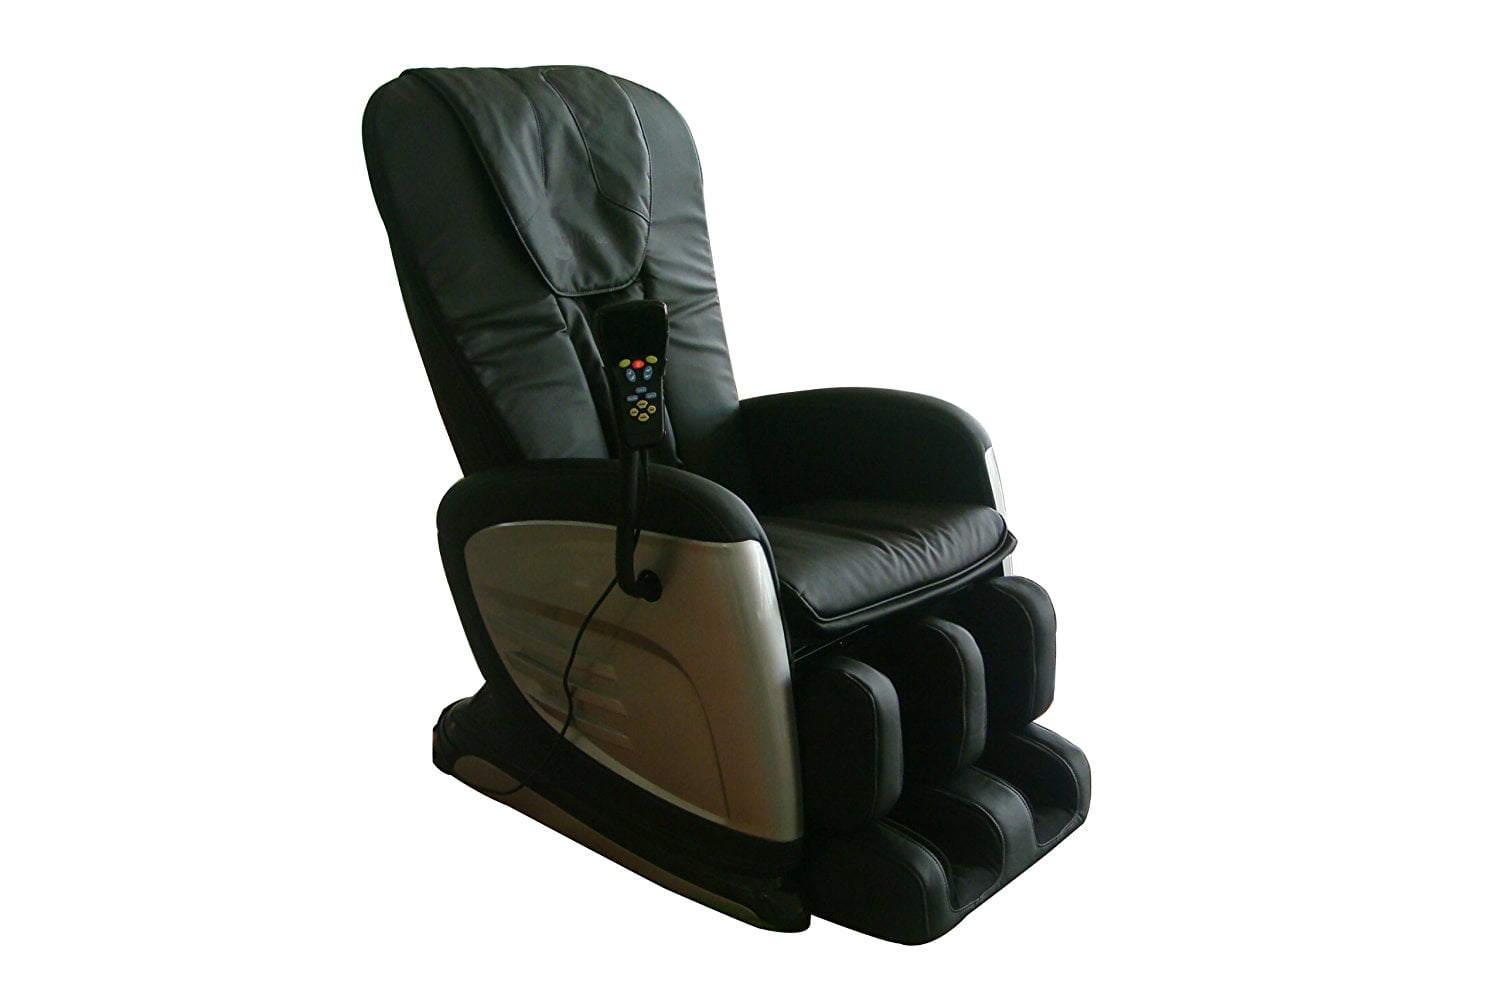 New Full Body Shiatsu Massage Chair Recliner Wheat Stretched Foot Rest